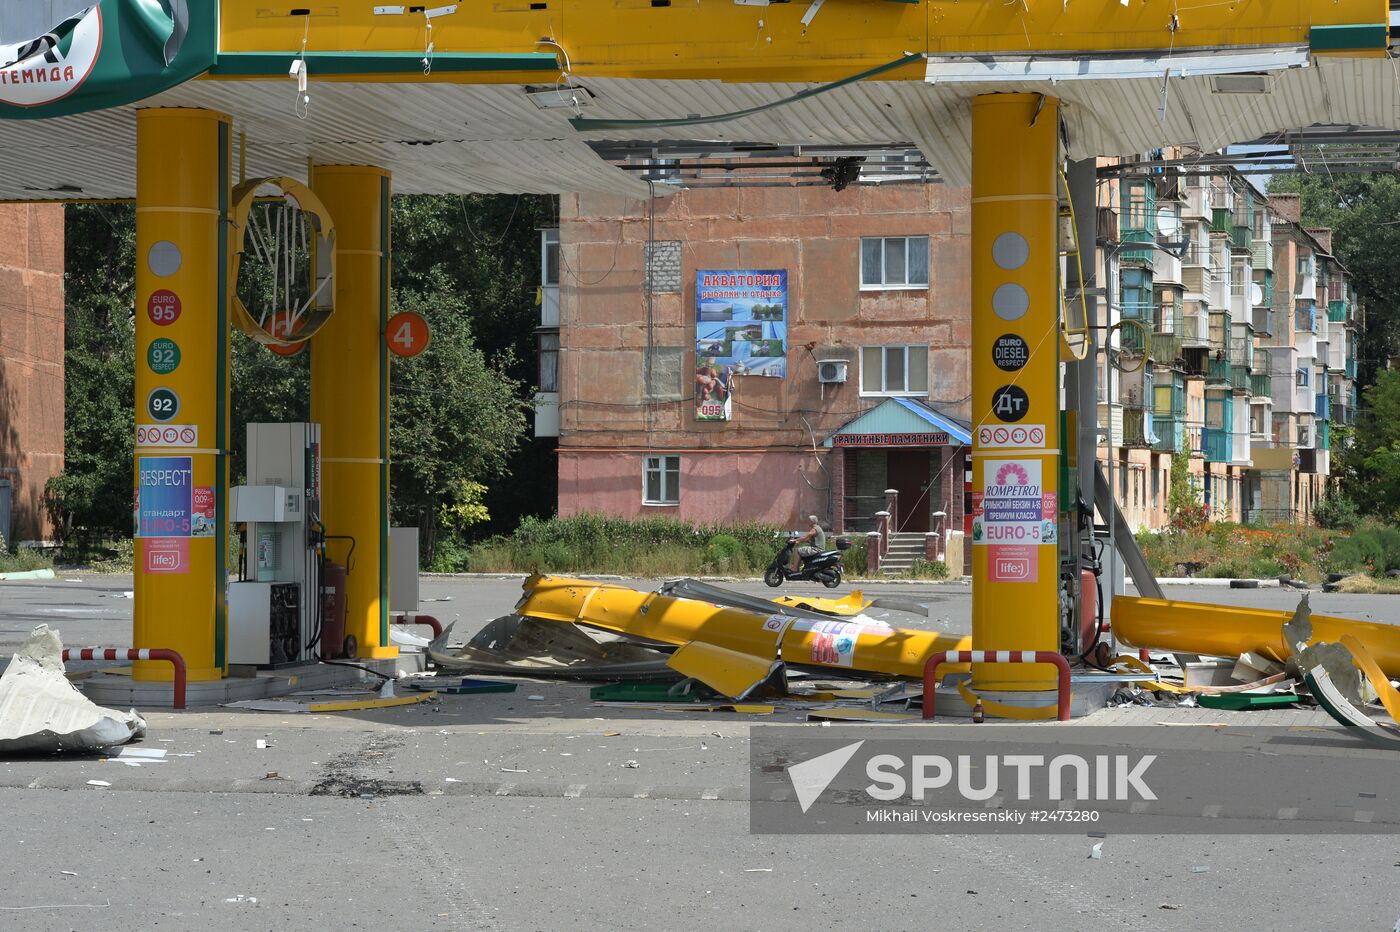 Update on Shakhtyorsk, Donetsk Region